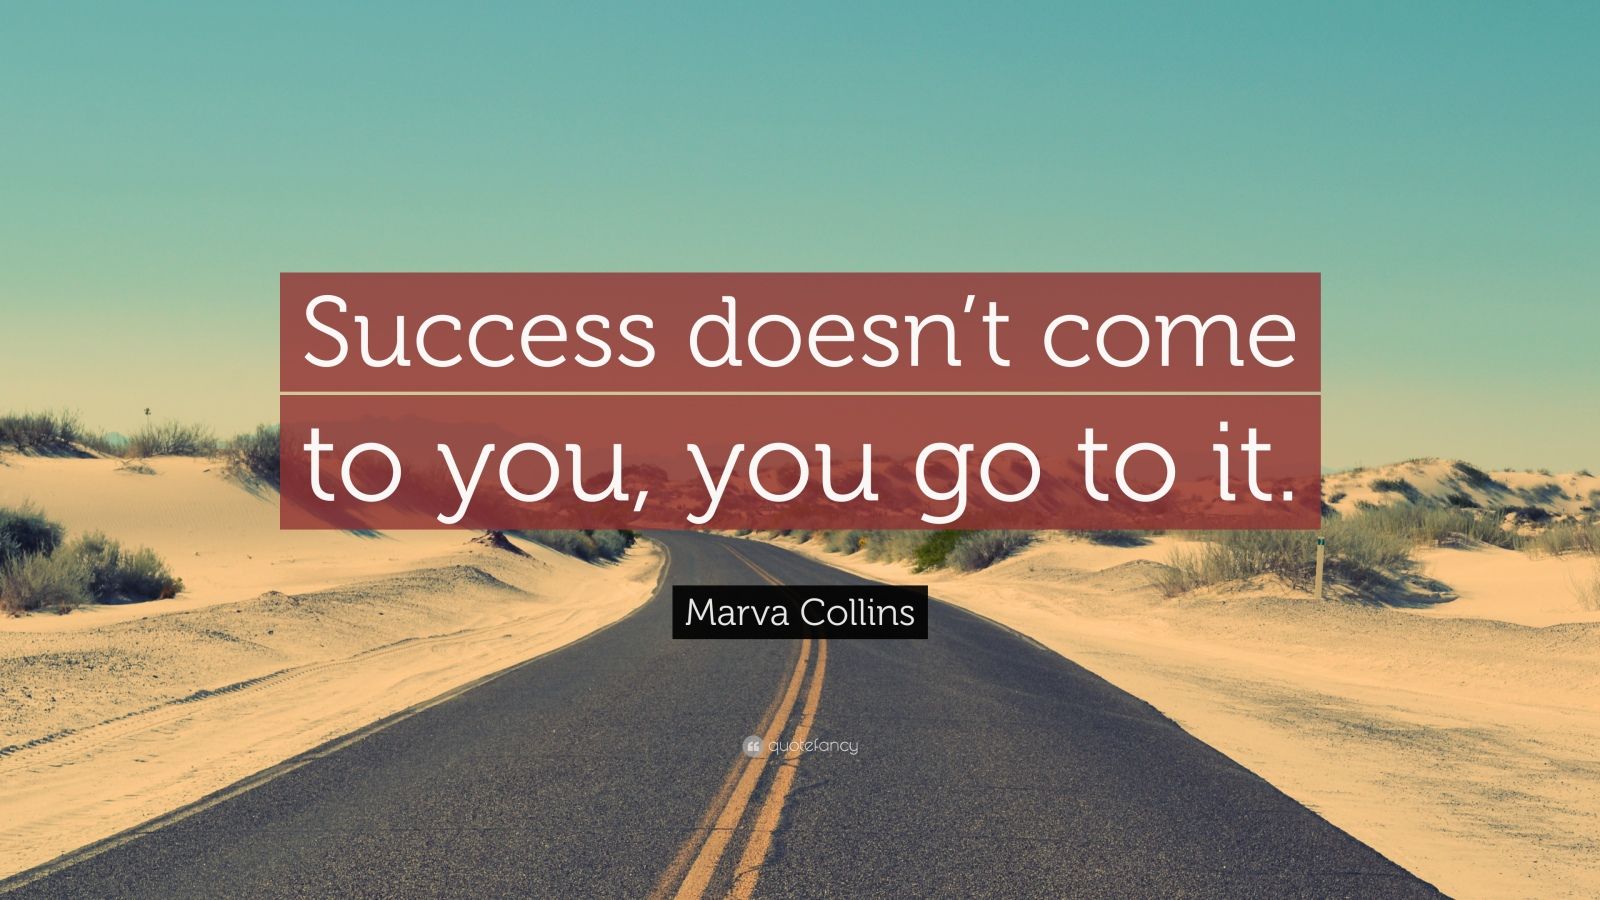 Marva Collins Quote: 